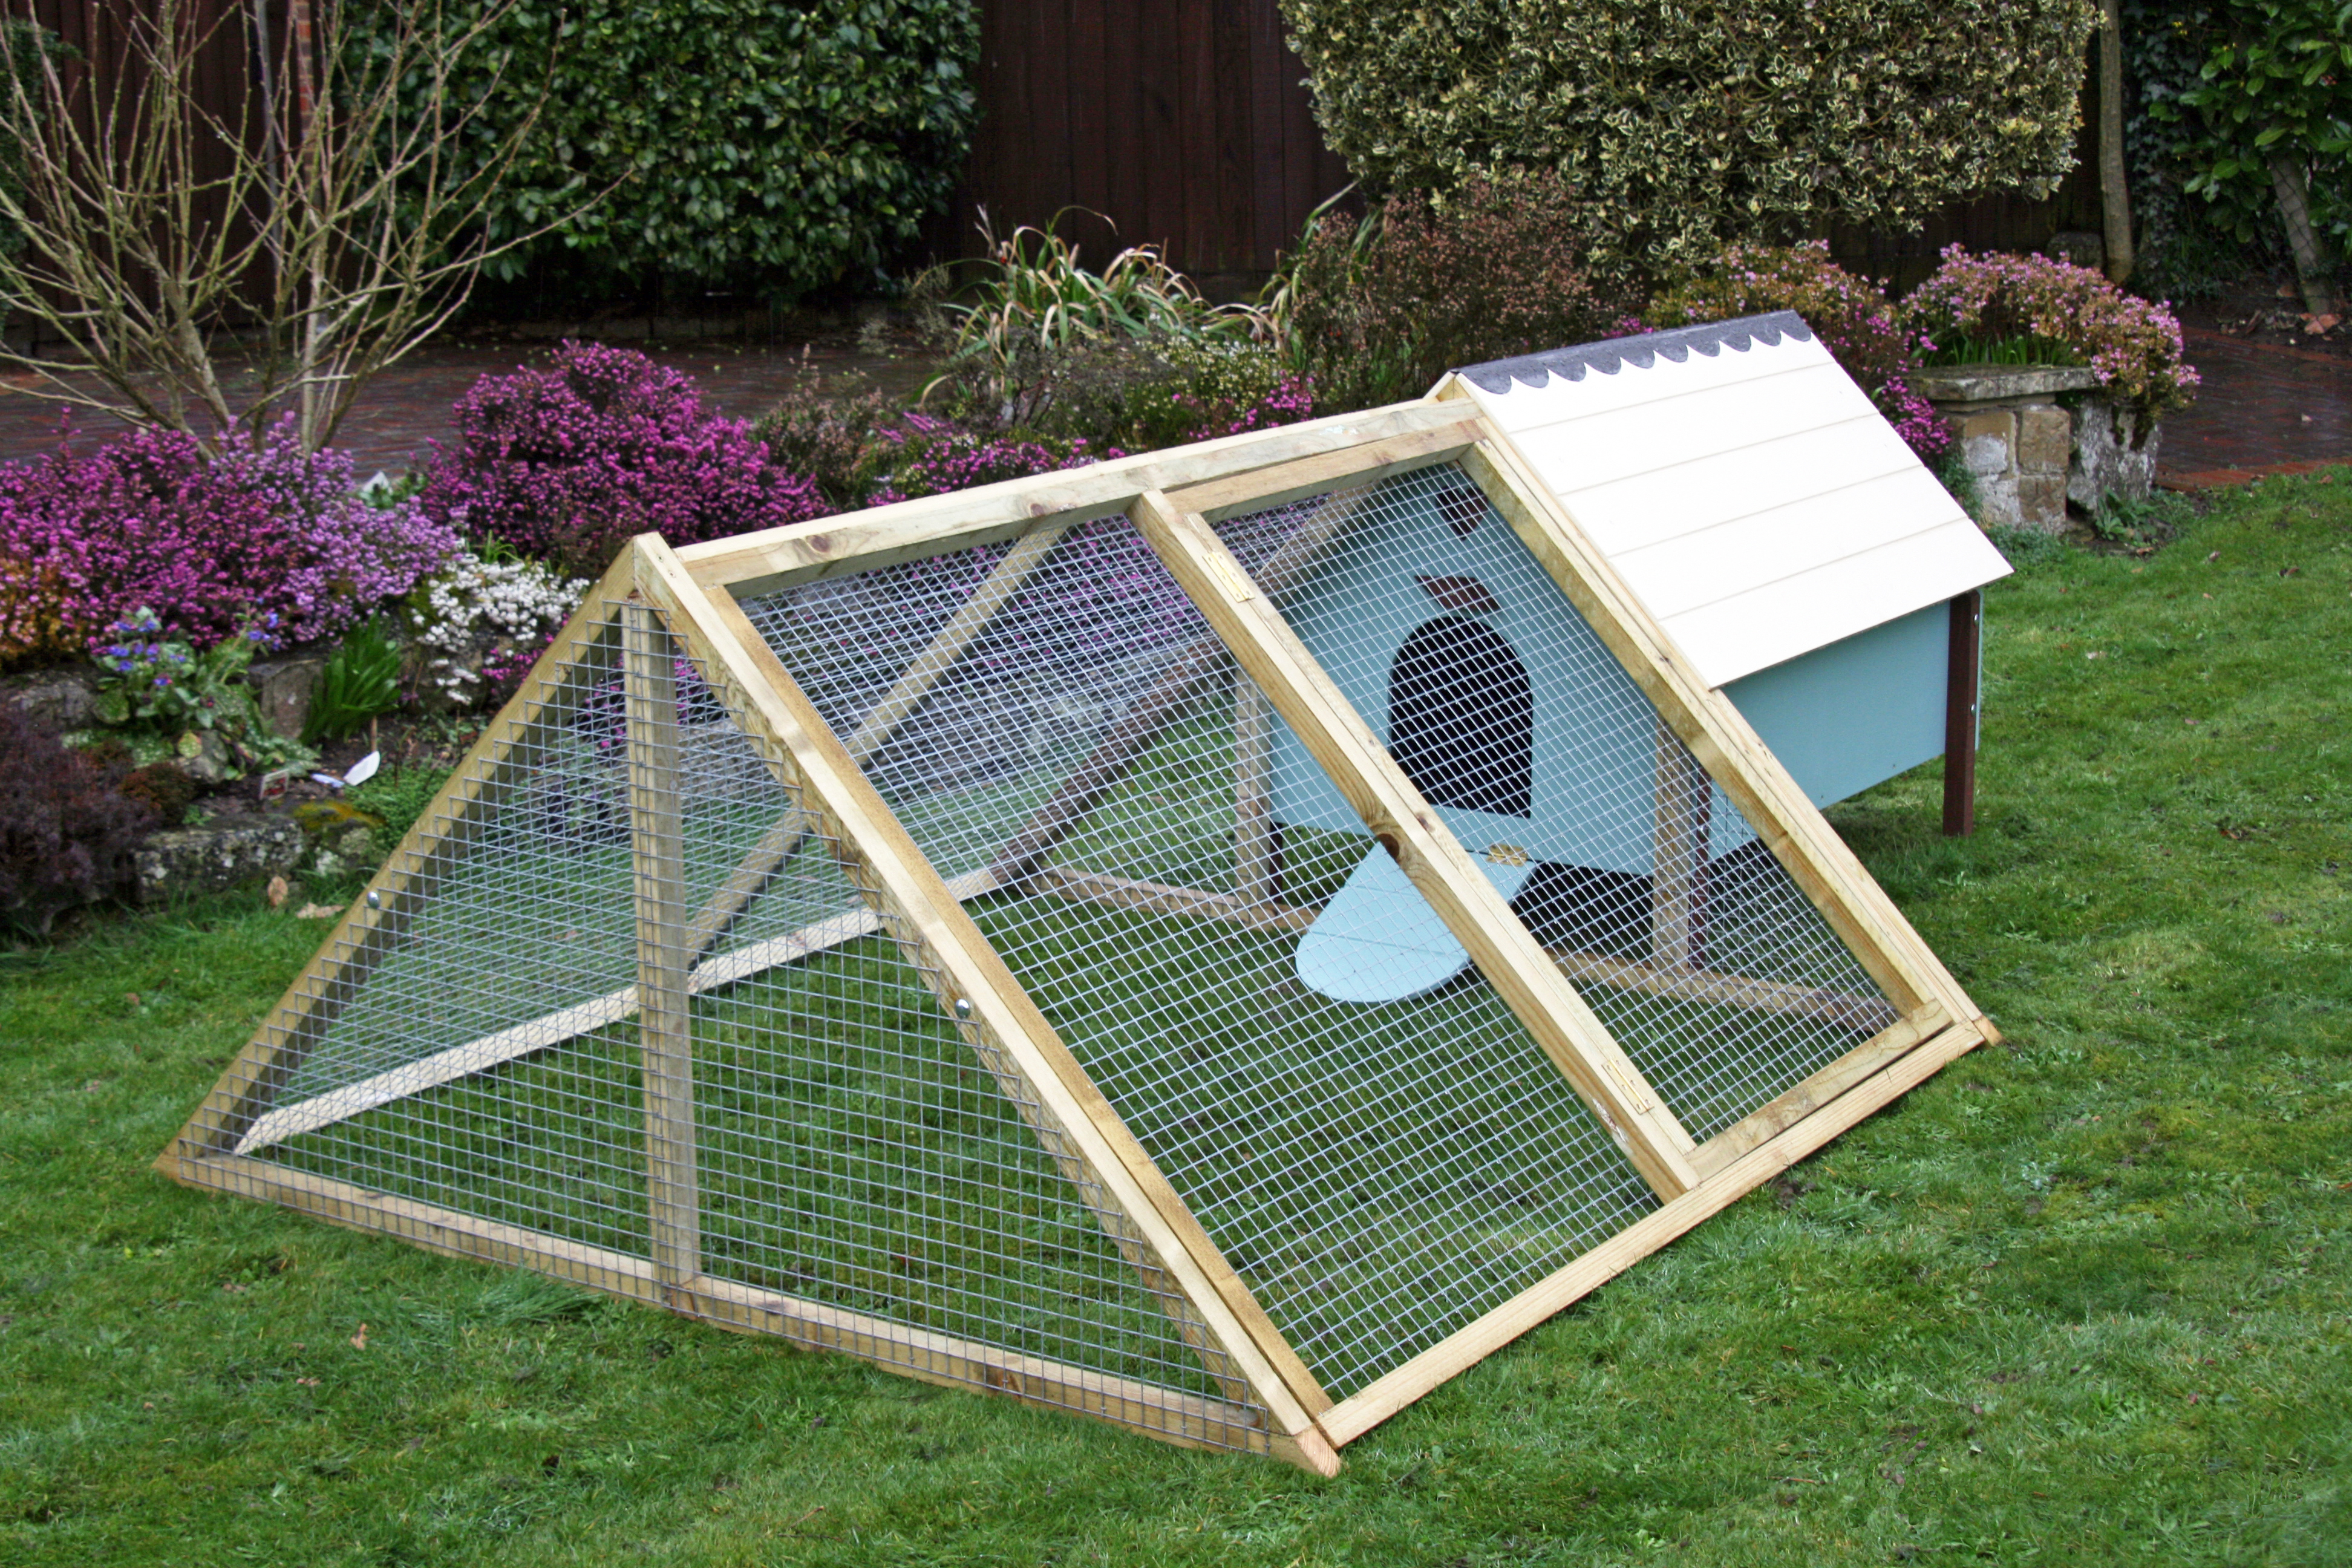 henhouse atffixed to an 'A-frame' enclosure